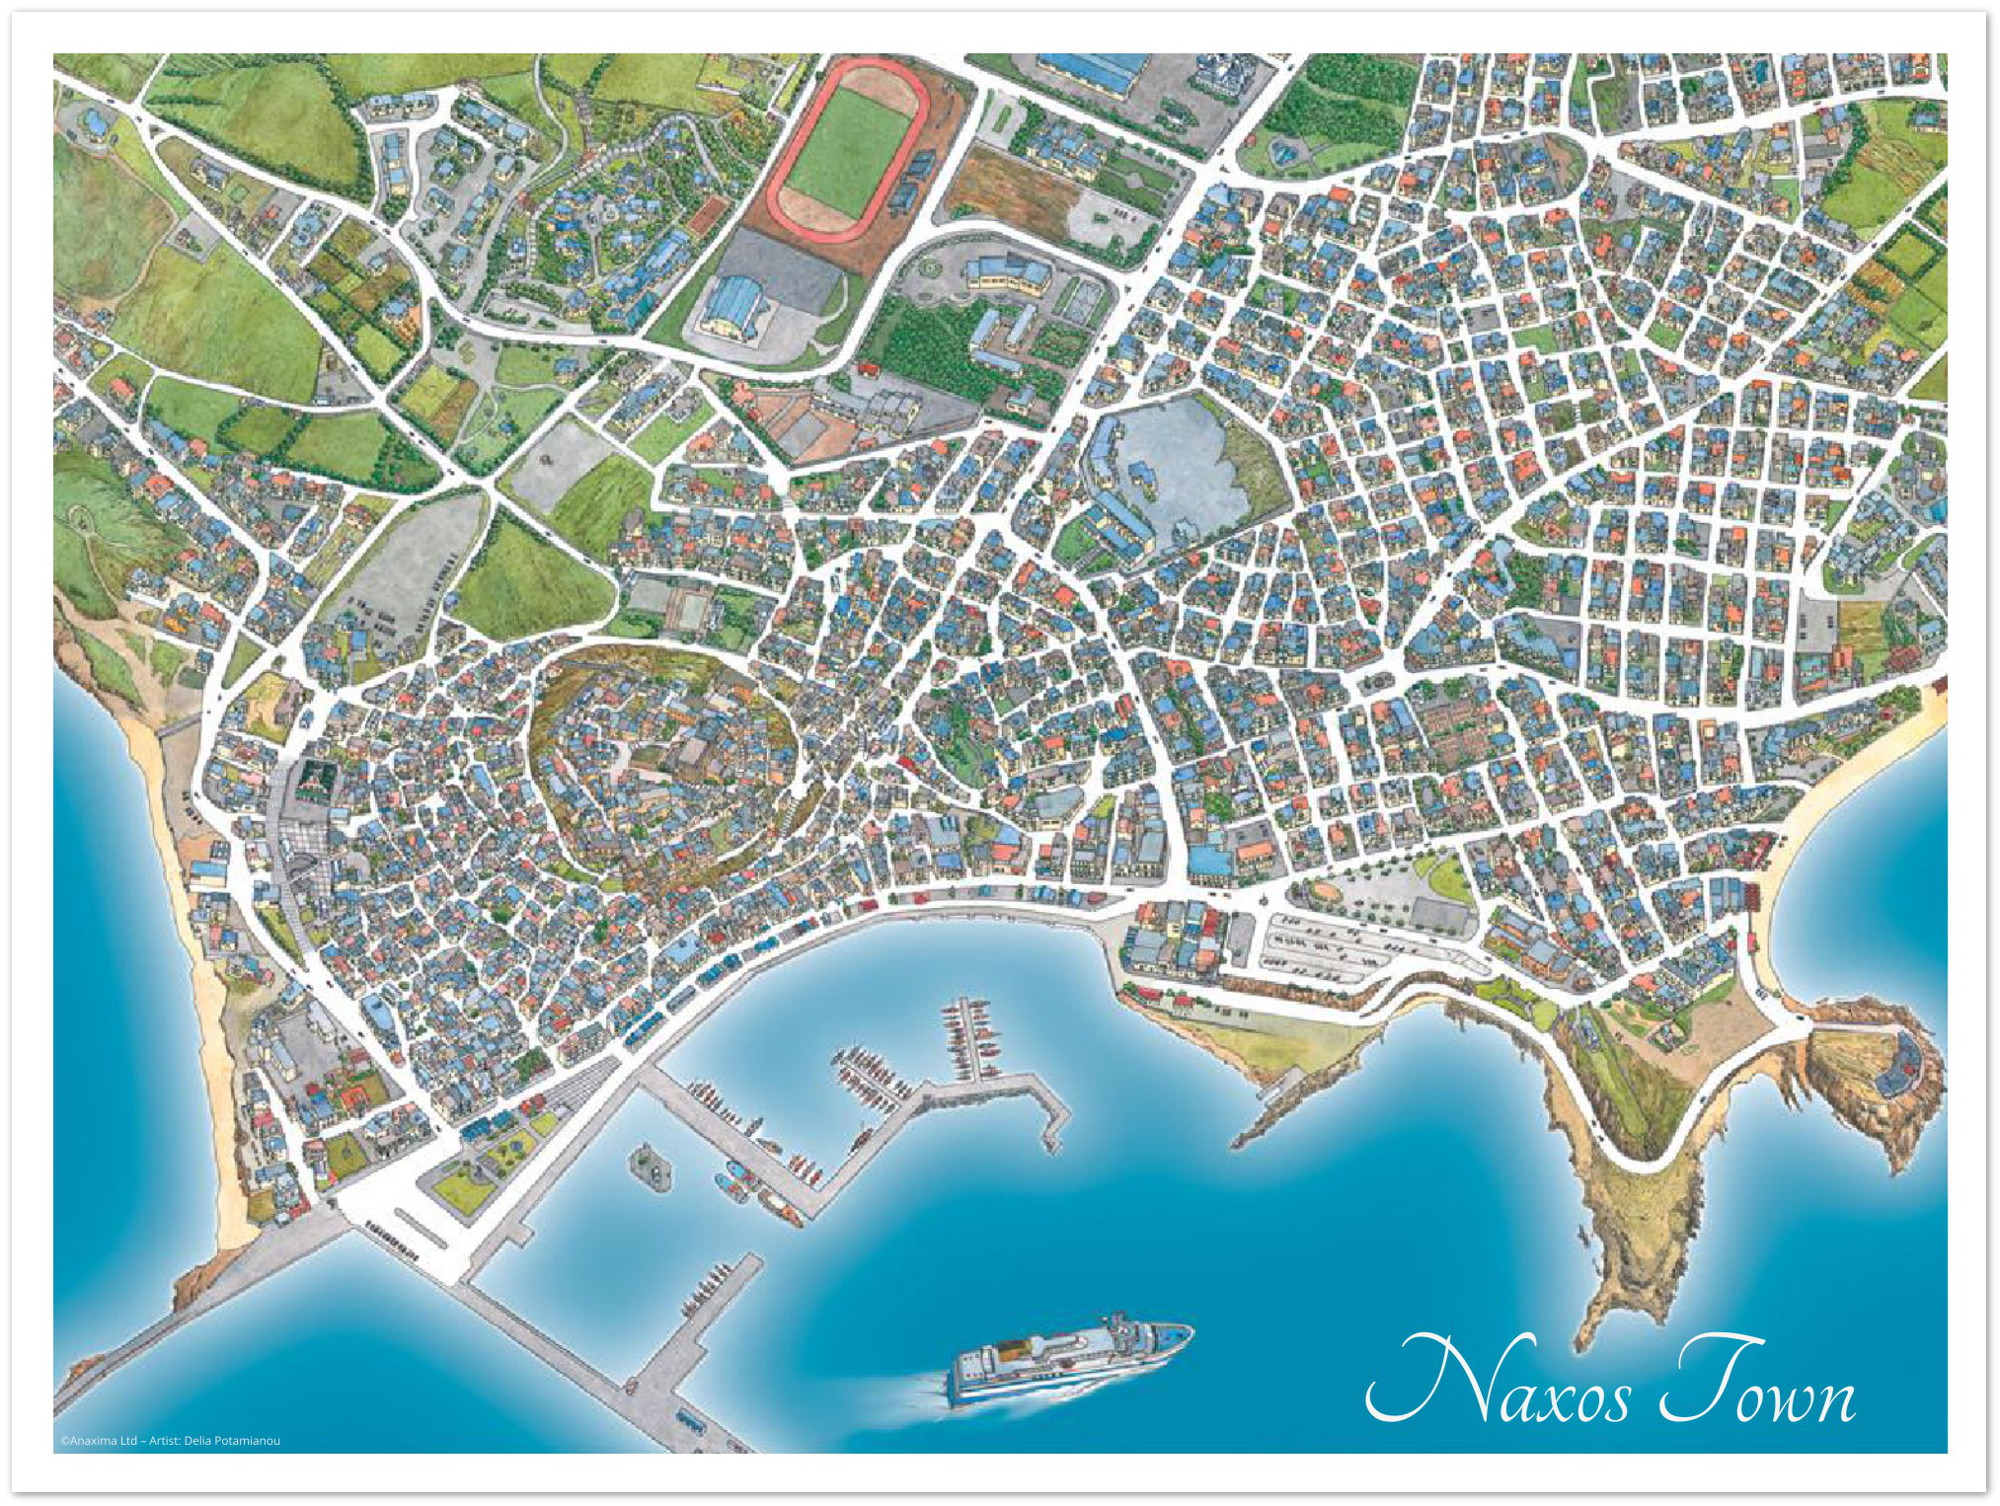 Naxos Town, Greece - Color - Premium Semi-Glossy Paper Poster